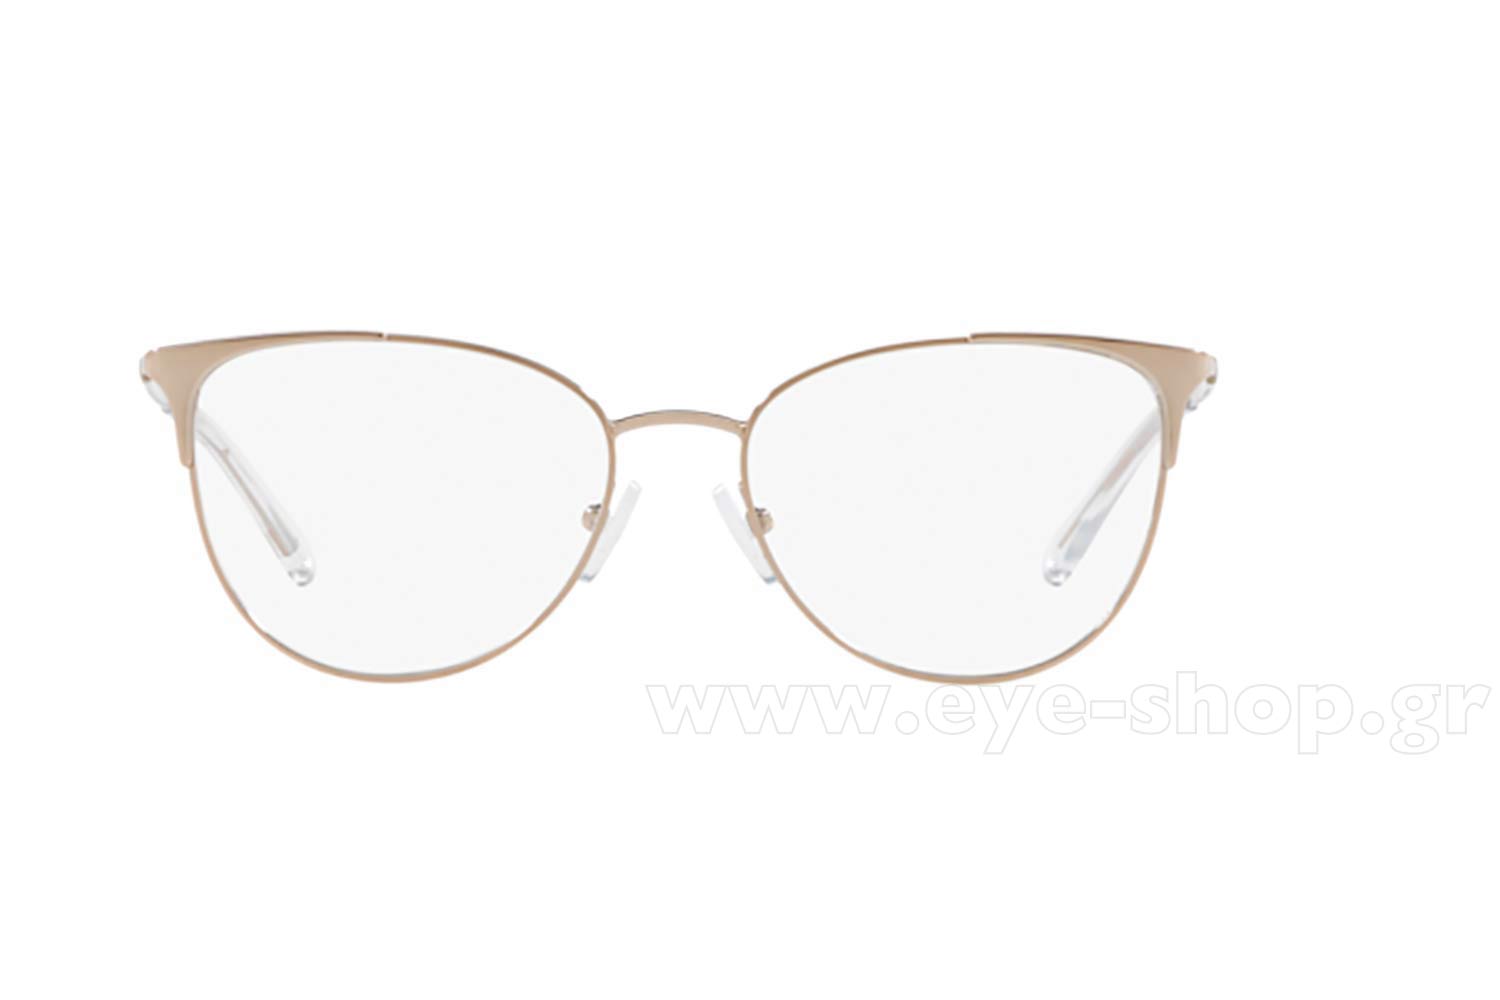 armani glasses for ladies